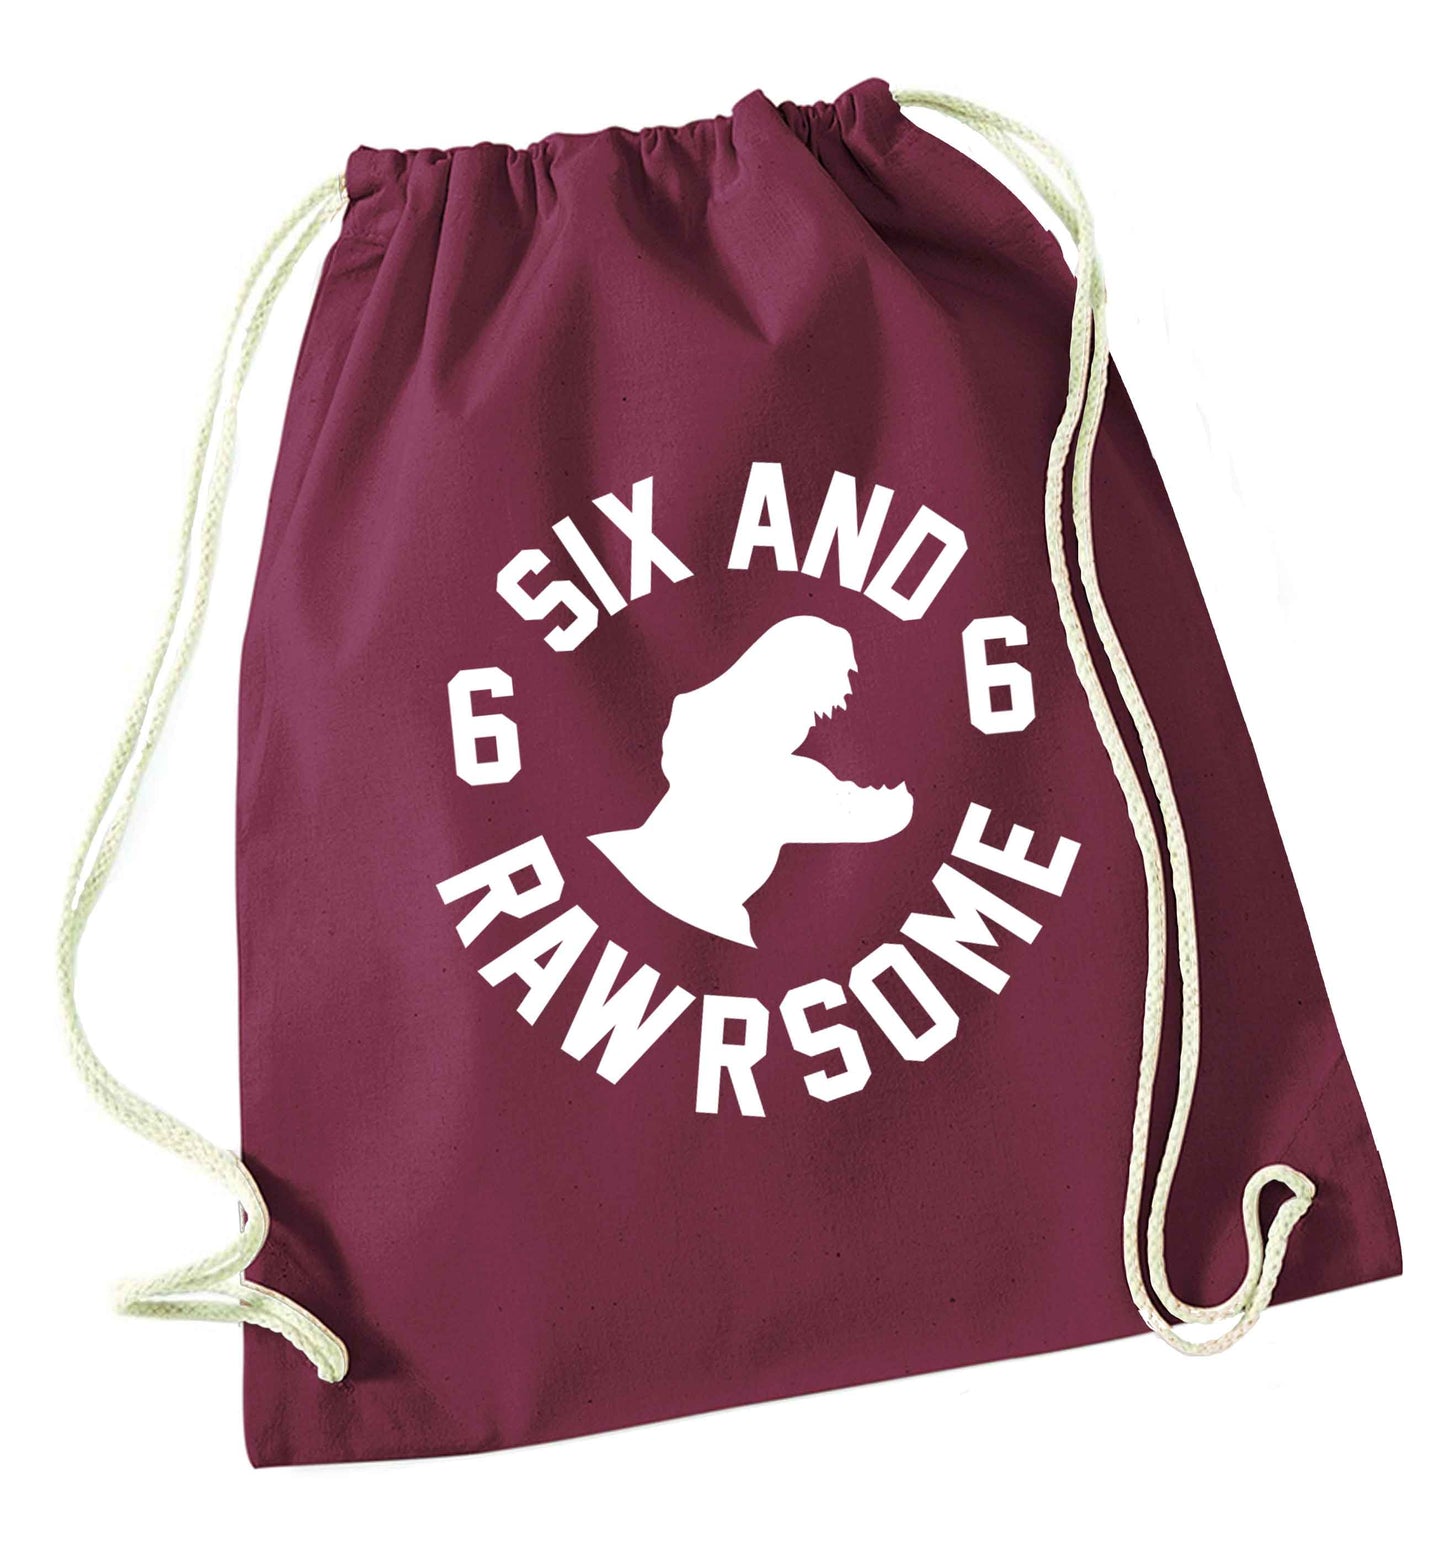 Six and rawrsome maroon drawstring bag